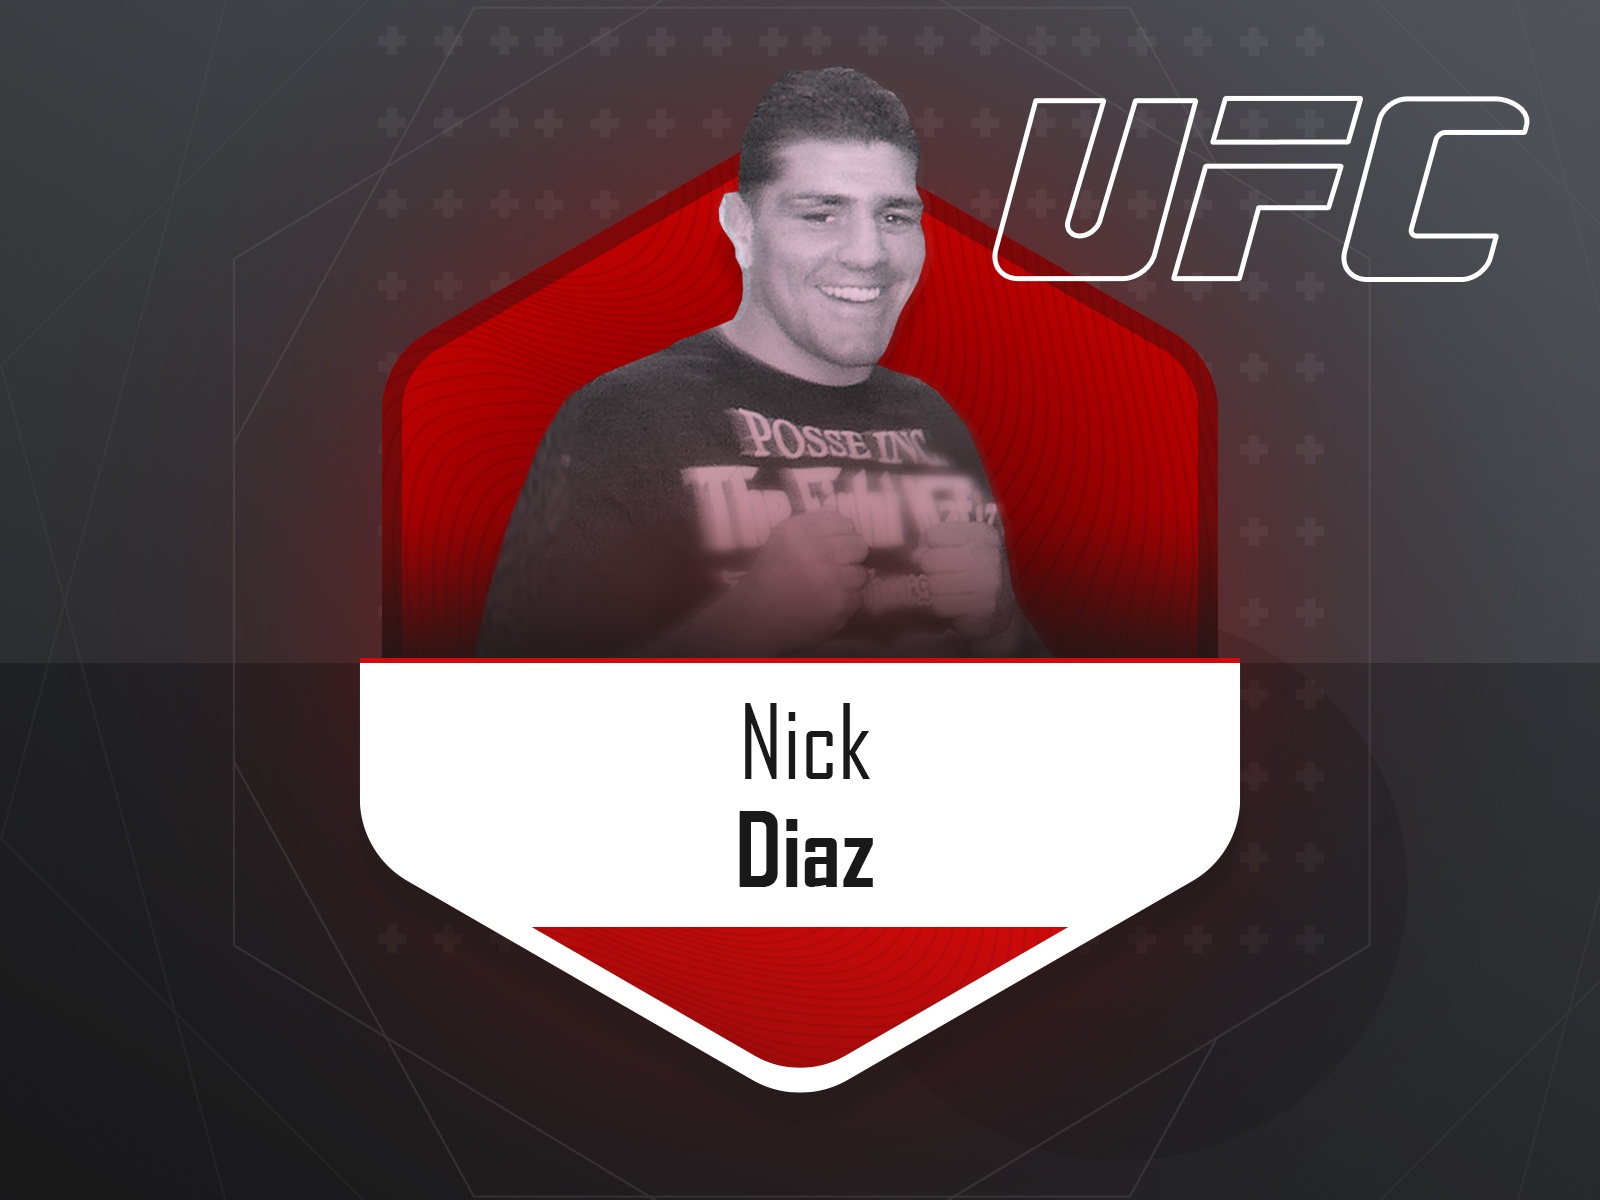 Nick Diaz - UFC fighter